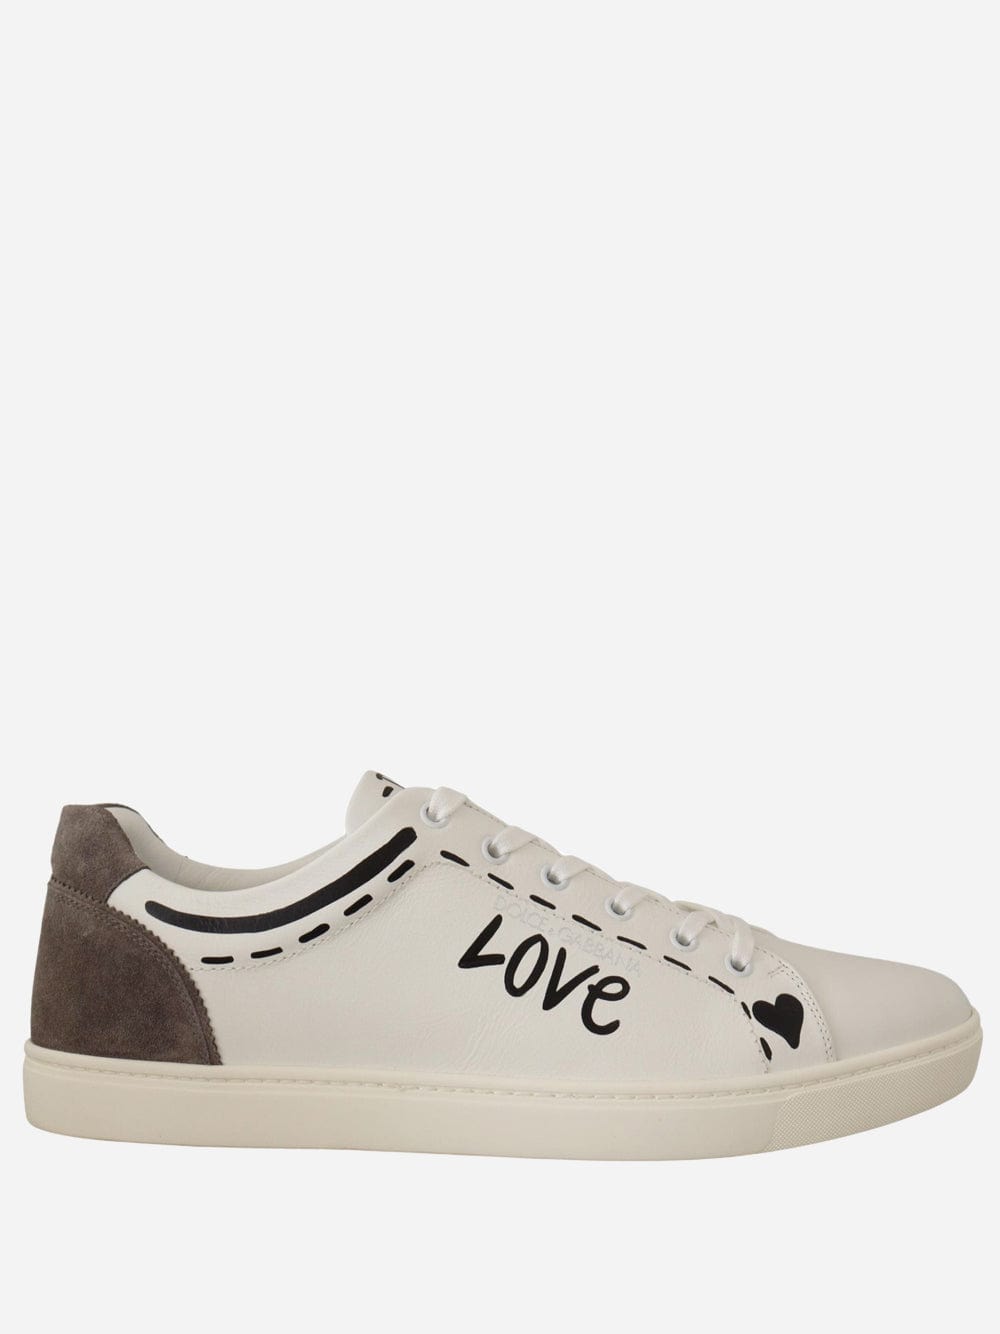 Dolce & Gabbana Milano Love Low Top Sneakers